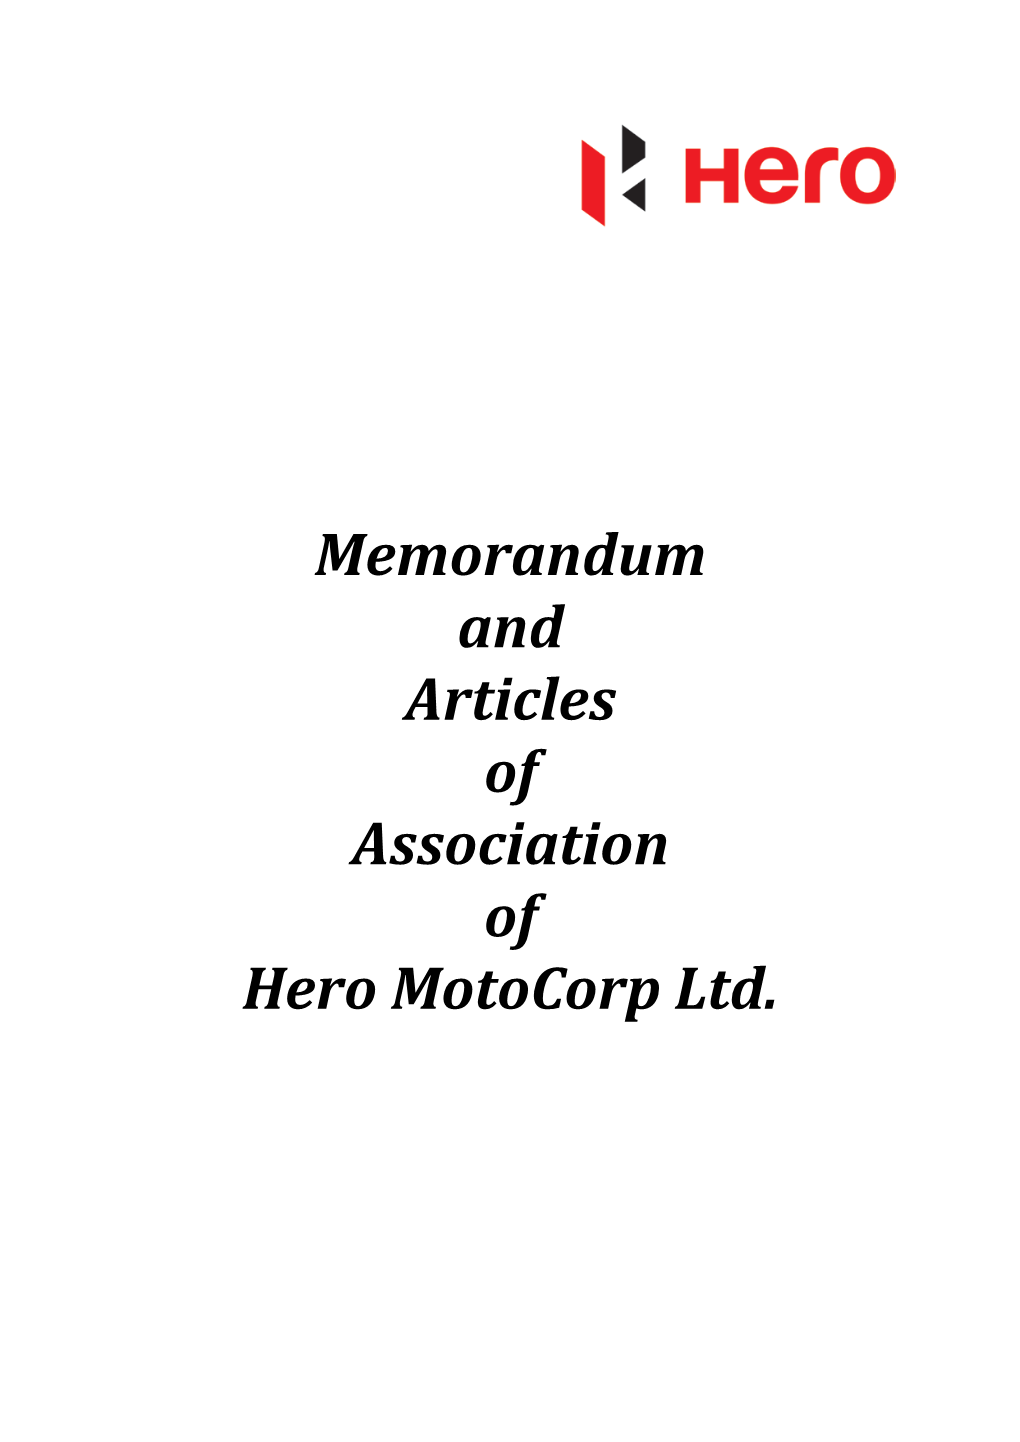 Memorandum and Articles of Association of Hero Motocorp Ltd